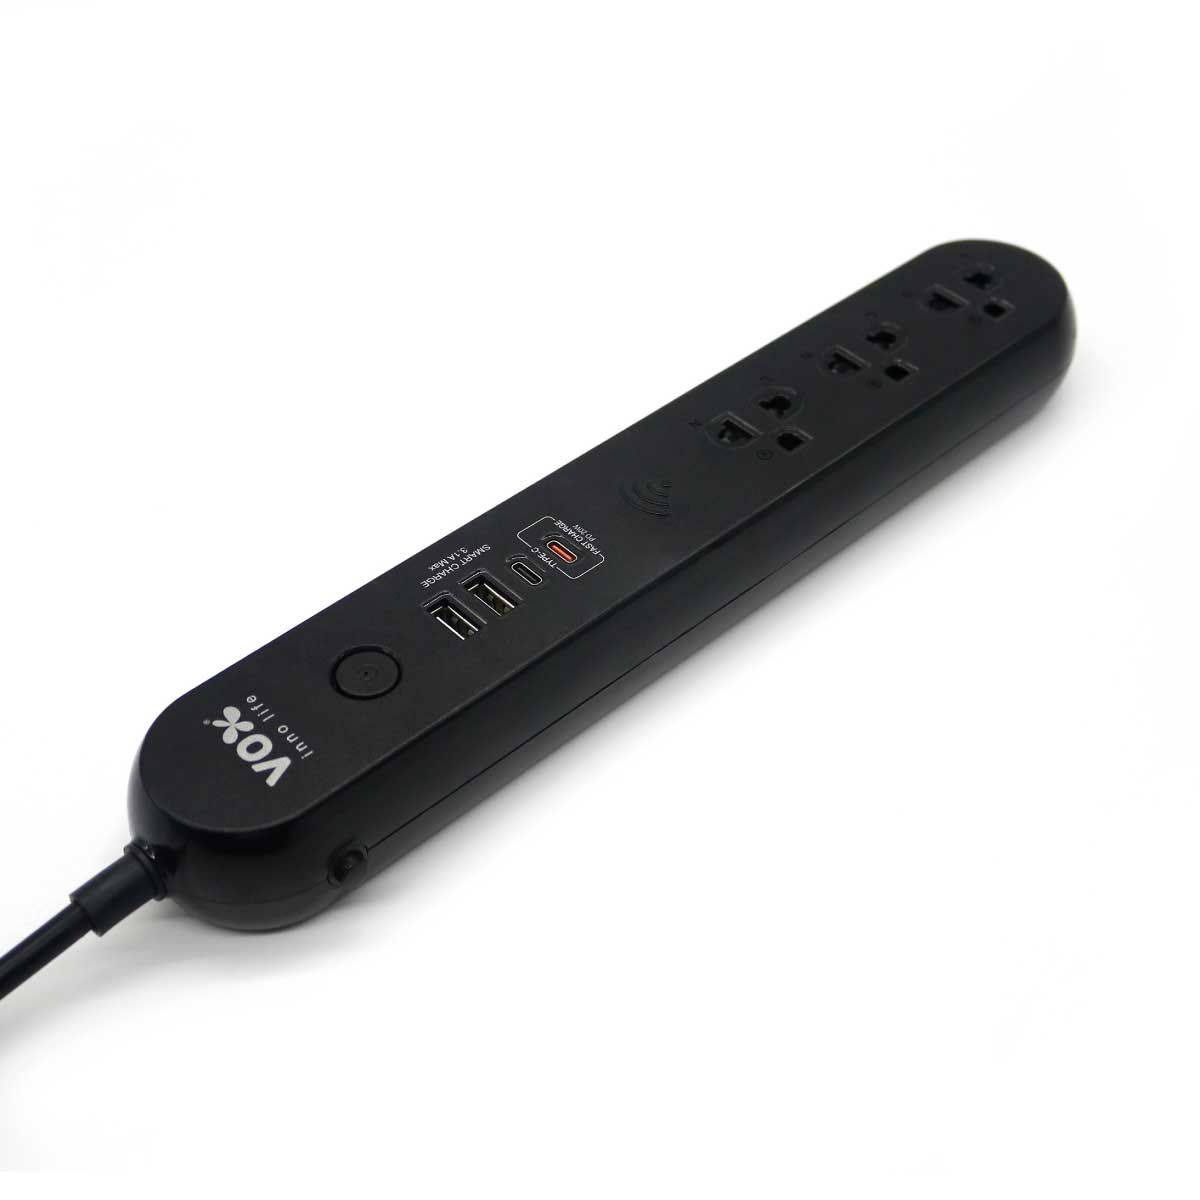 VOX ปลั๊กโนว่าNOVA สวิตซ์ x 3 ช่อง ,2 x USB 1C 3เมตรสีดำ รุ่นF5ST3-NON2-3141